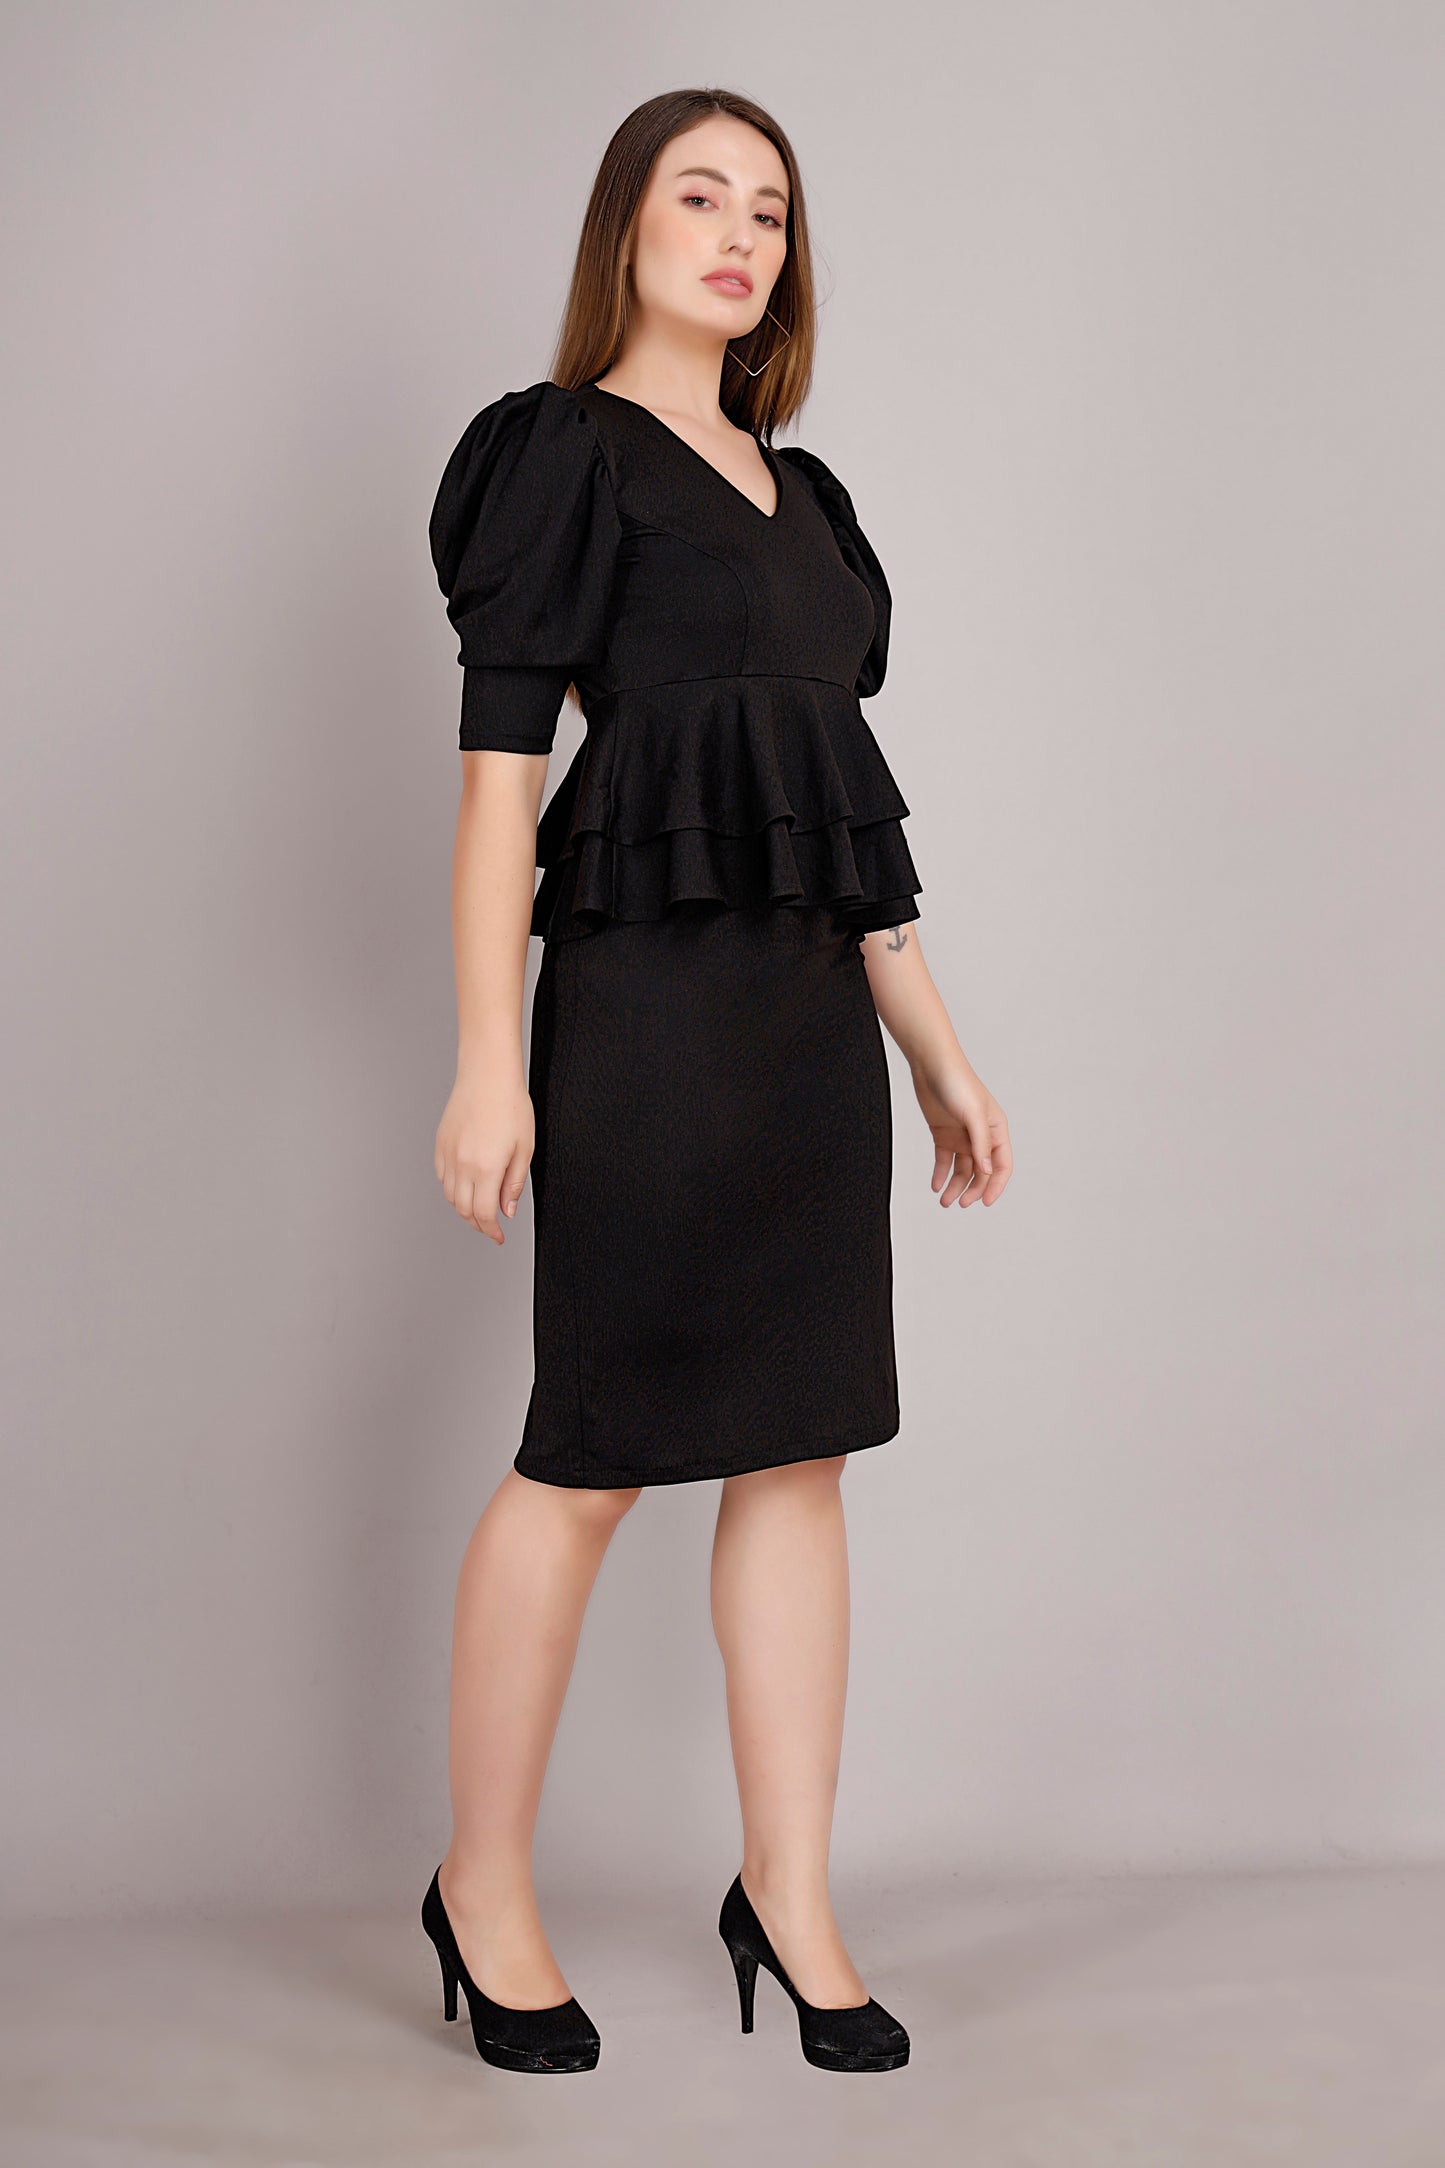 Black Peplum Style Dress